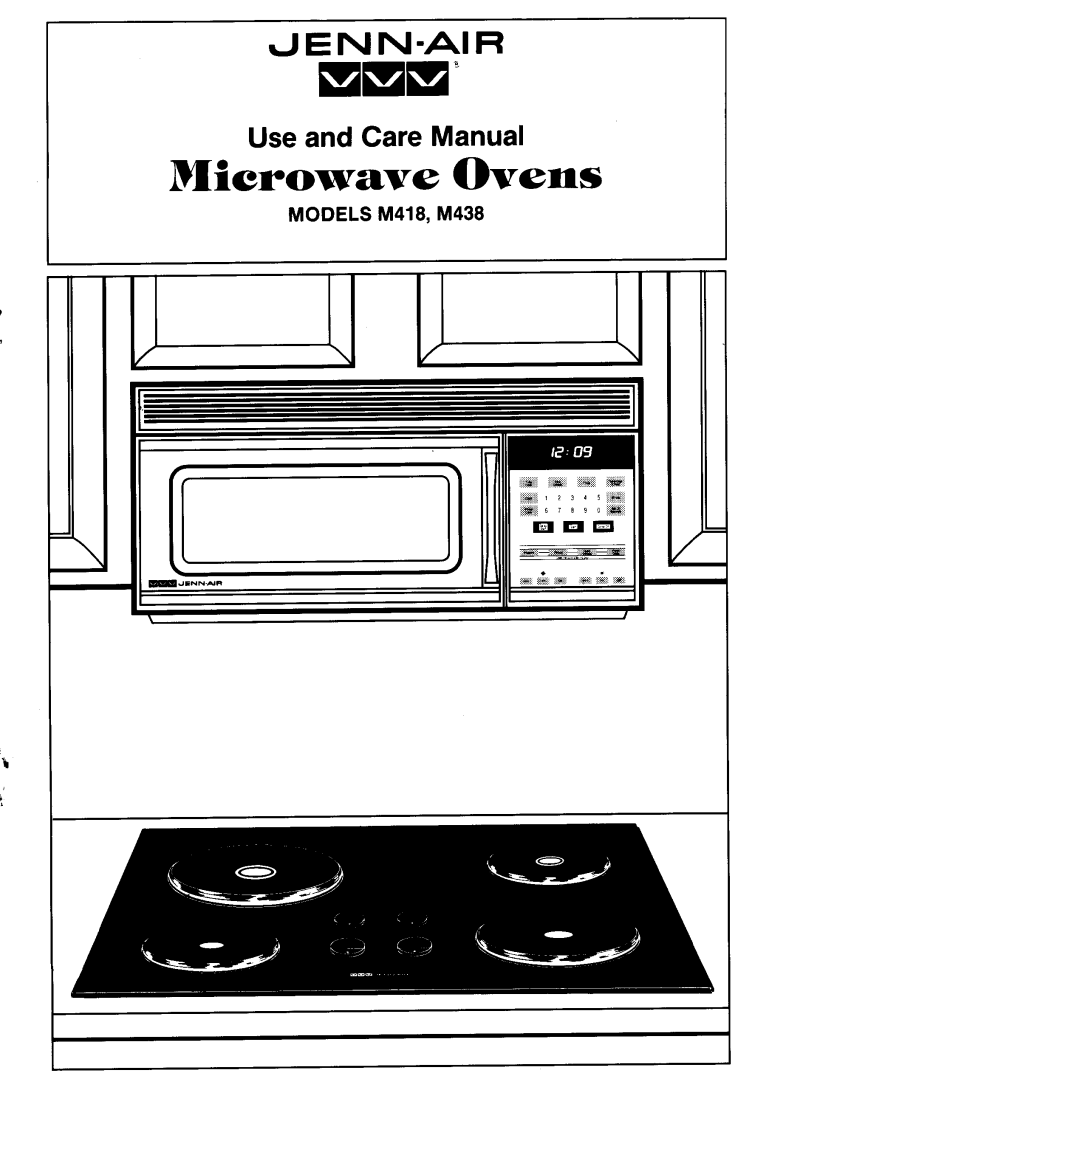 Jenn-Air manual Microwave Ovens, JENN-AIR Use and Care Manual, MODELS M418, M438 